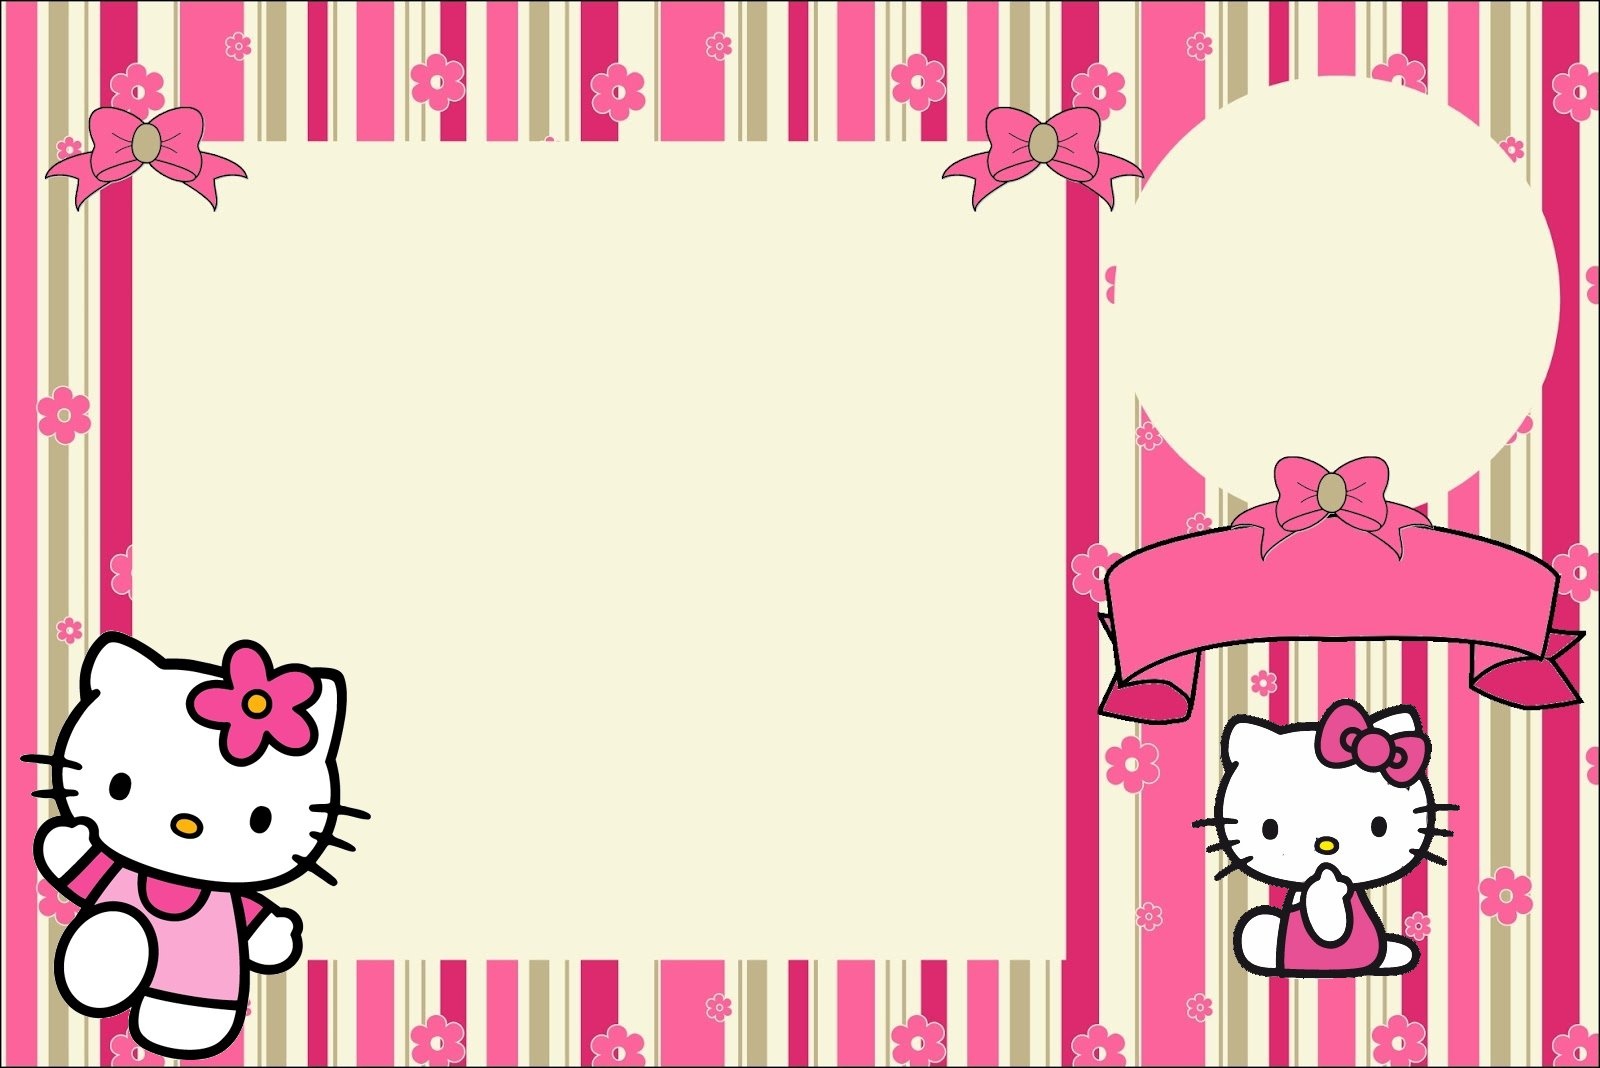 Hello Kitty With Flowers: Free Printable Invitations. - Oh My Fiesta - Hello Kitty Birthday Card Printable Free